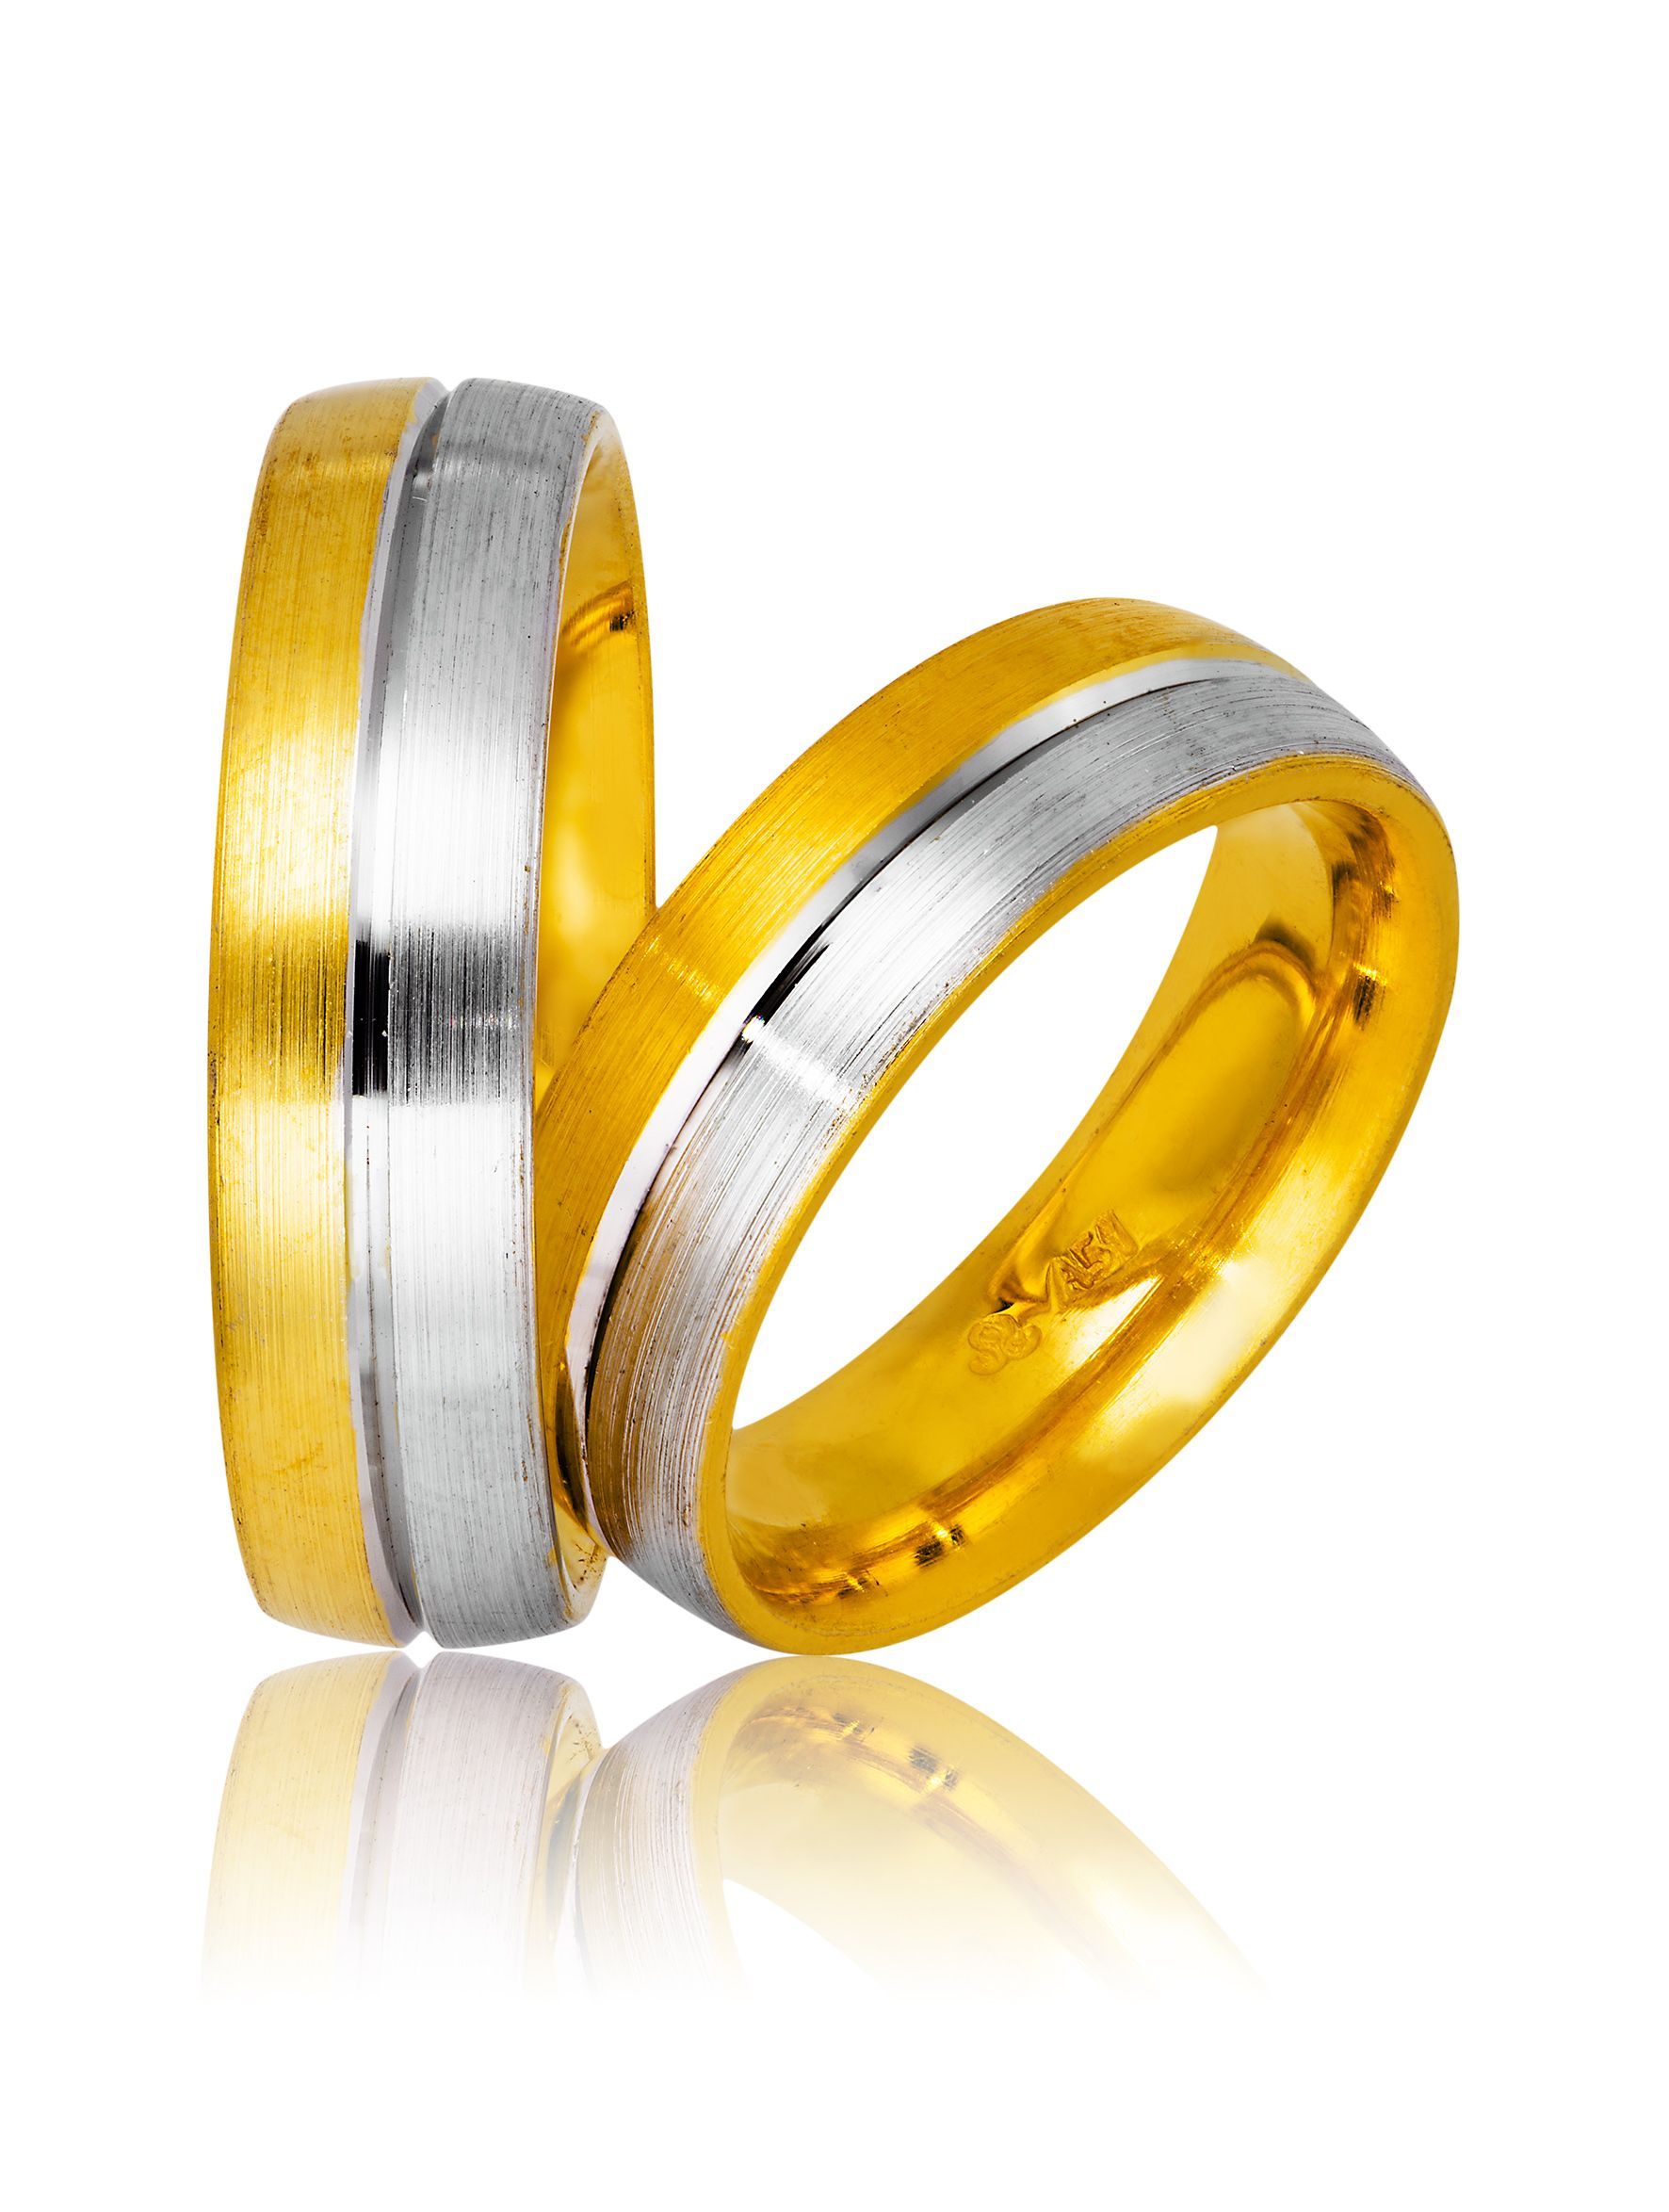 White gold & gold wedding rings 6mm (code 732)